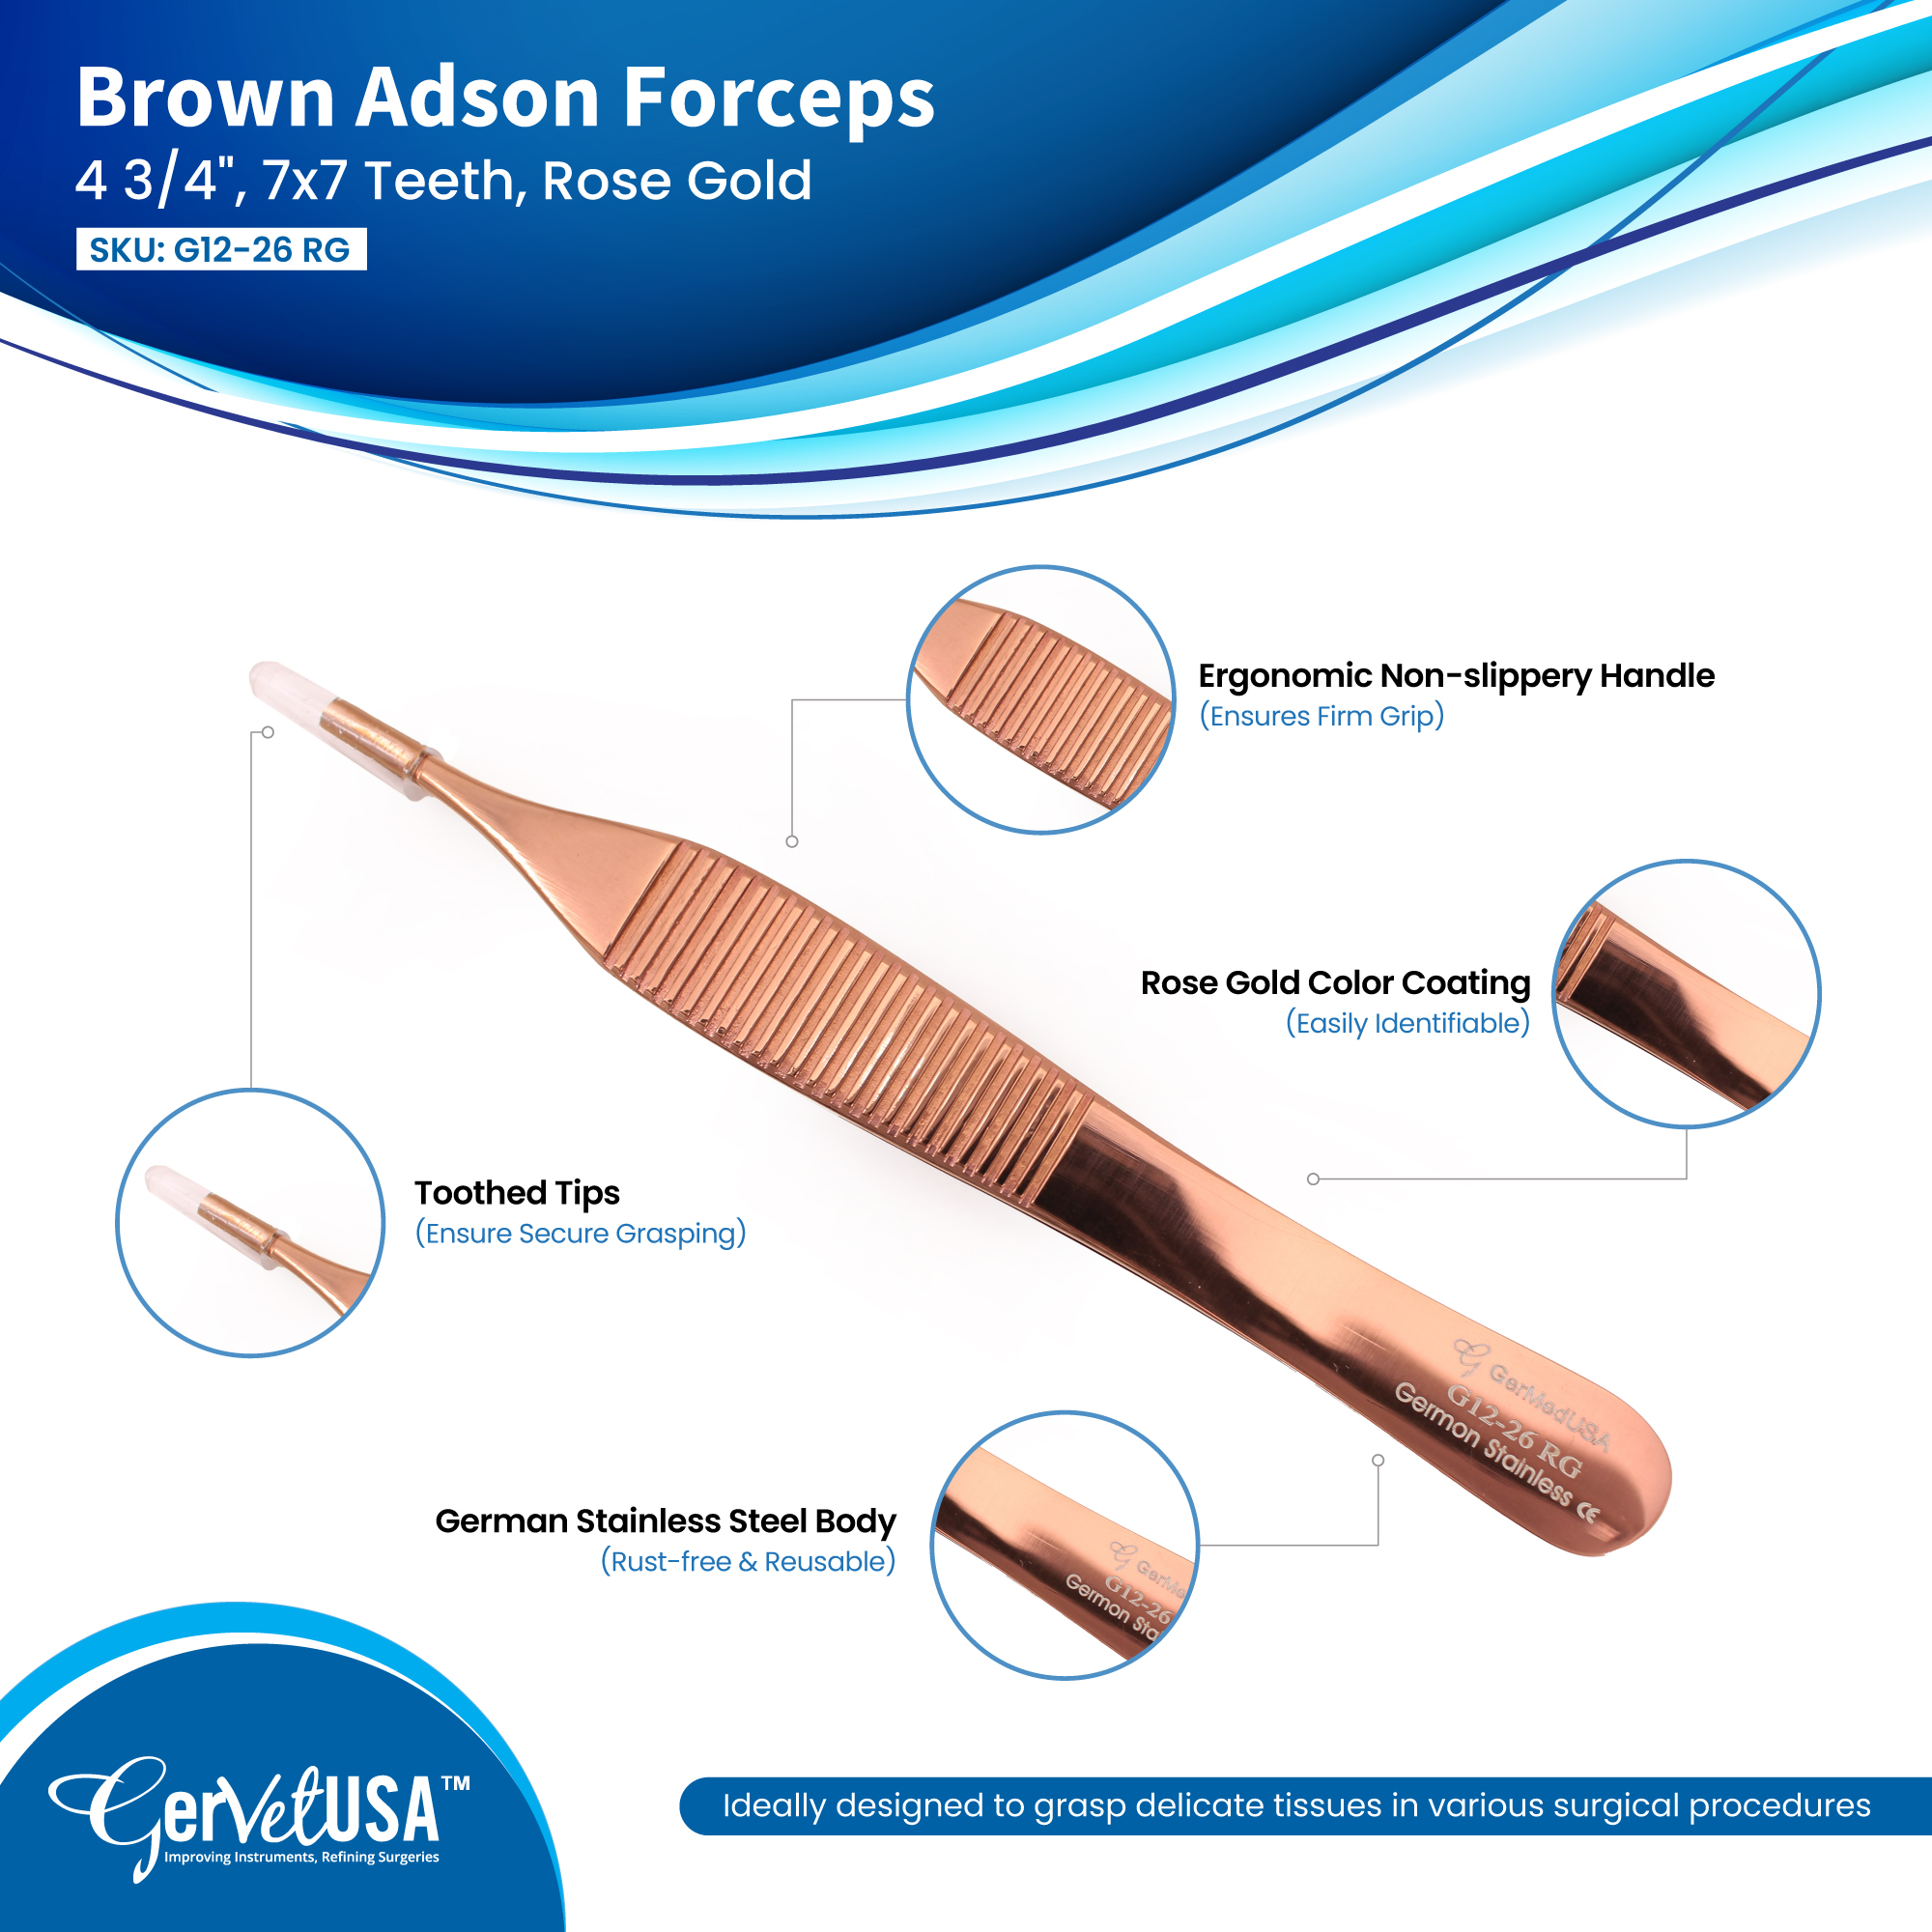 Brown Adson Forceps 4 3/4", 7x7 Teeth, Rose Gold